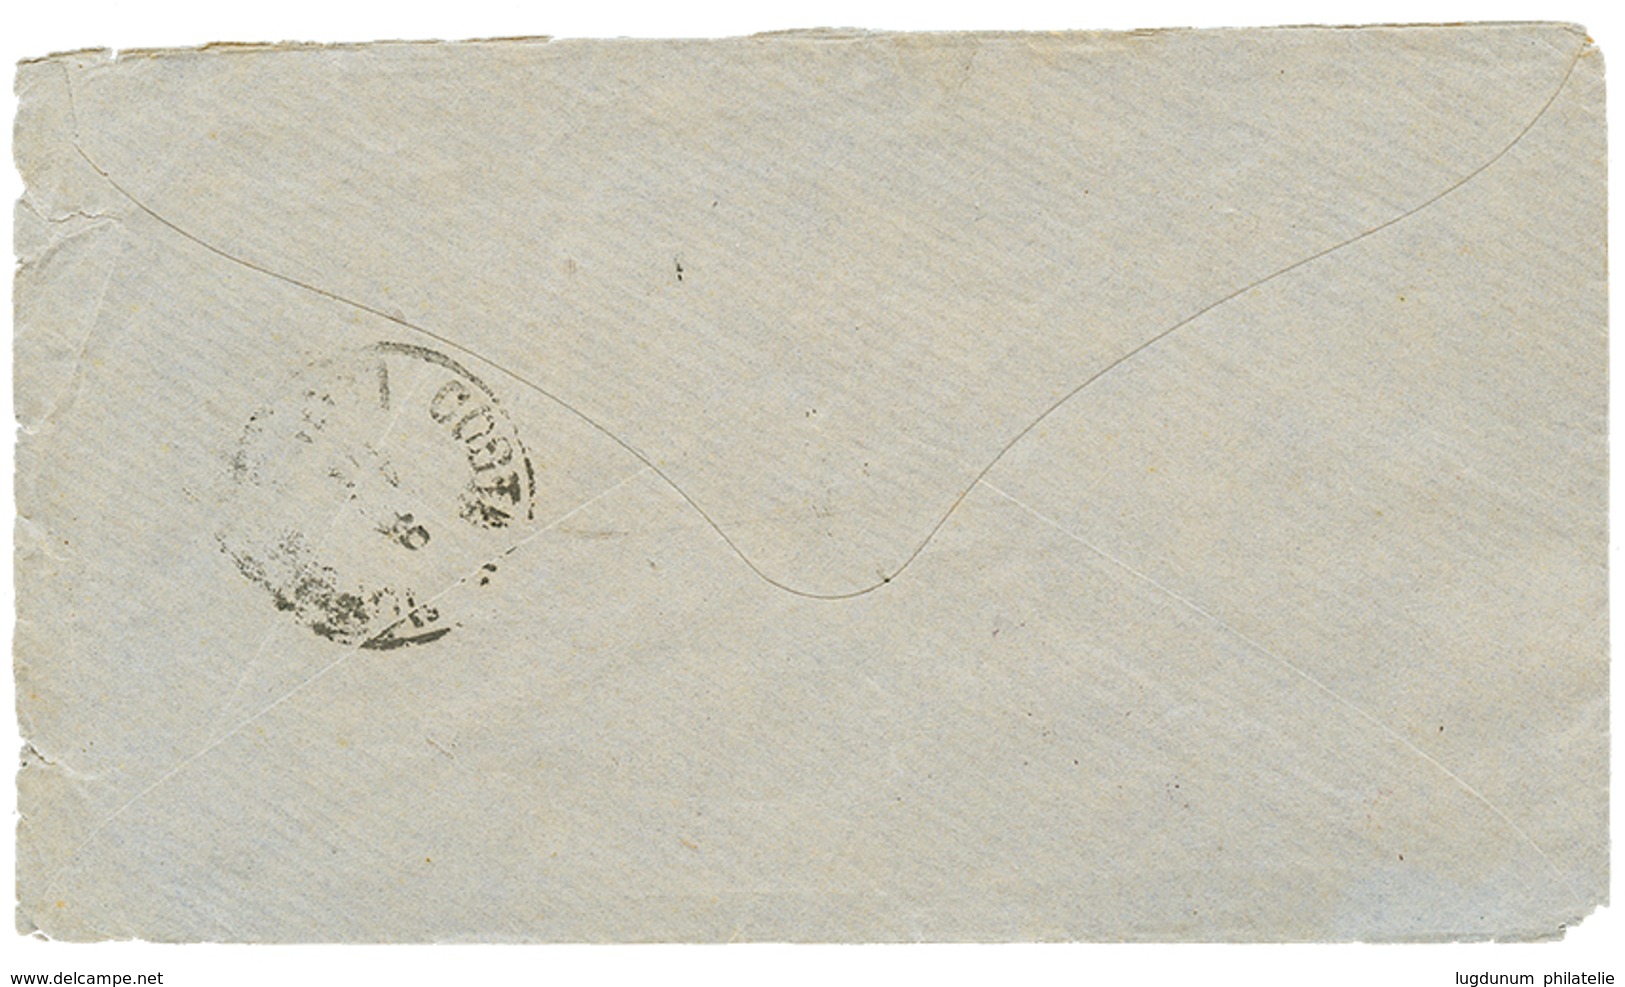 "CANEA" : 1881 5 SOLDI(x2) Canc. CANEA On Envelope To CONSTANTINOPLE. Superb. - Oriente Austriaco